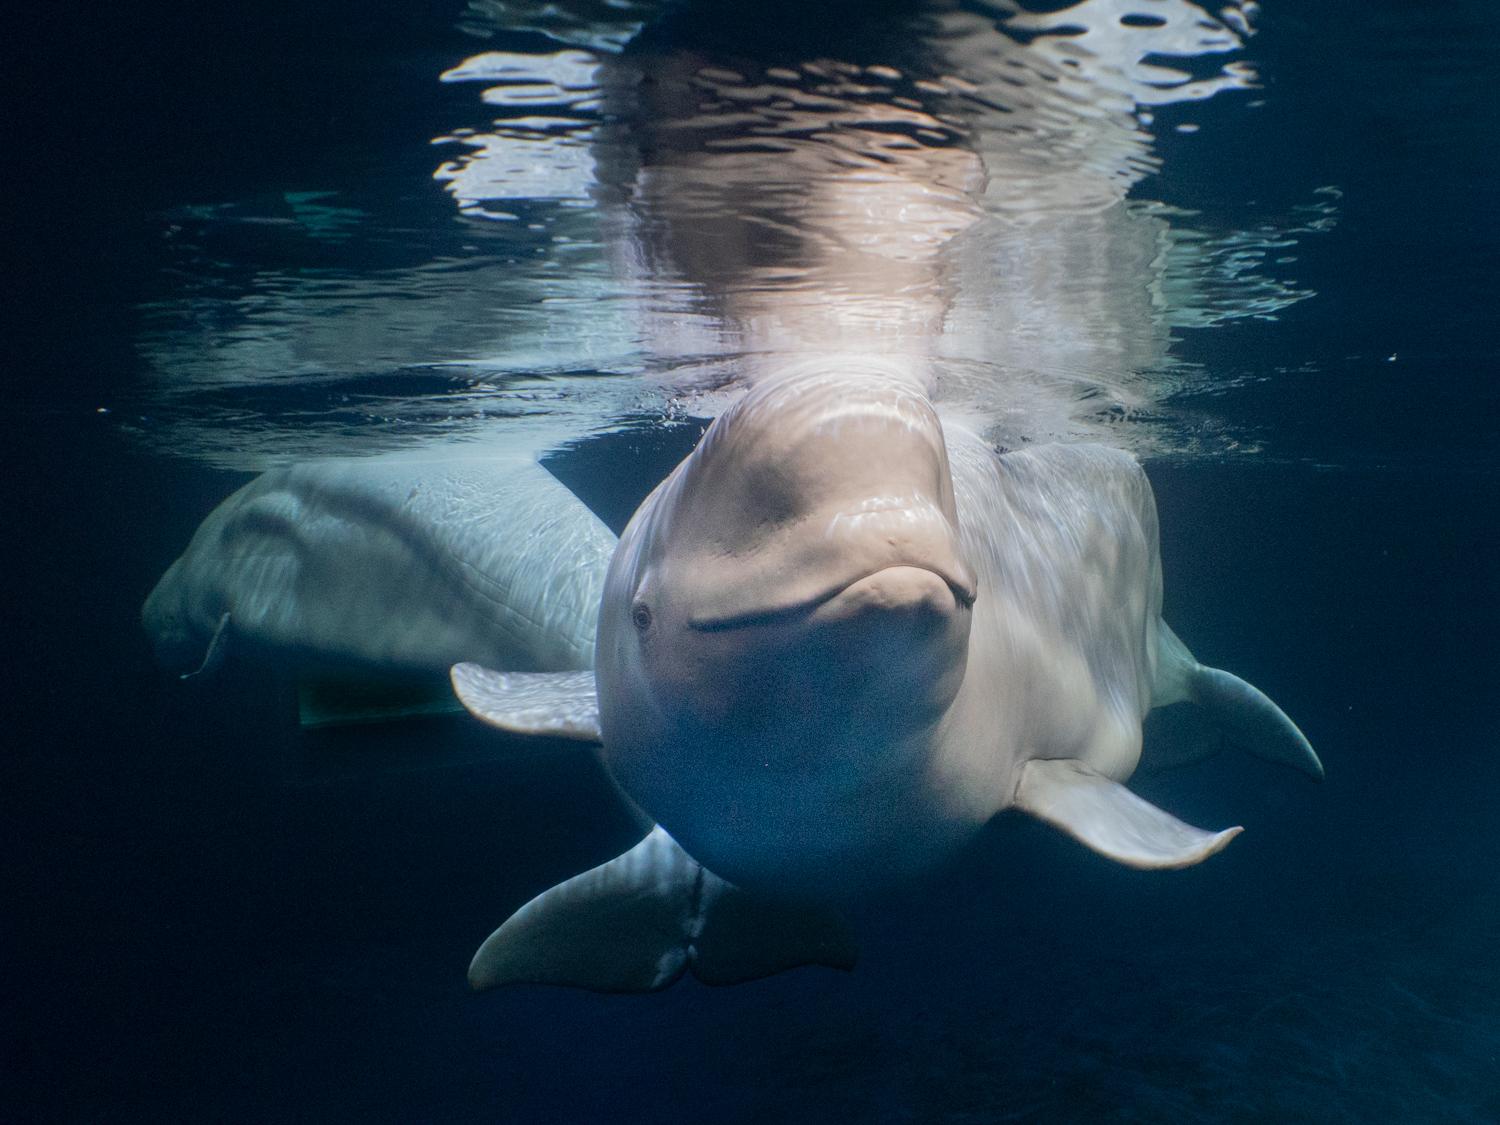 Beluga Whale Sanctuary